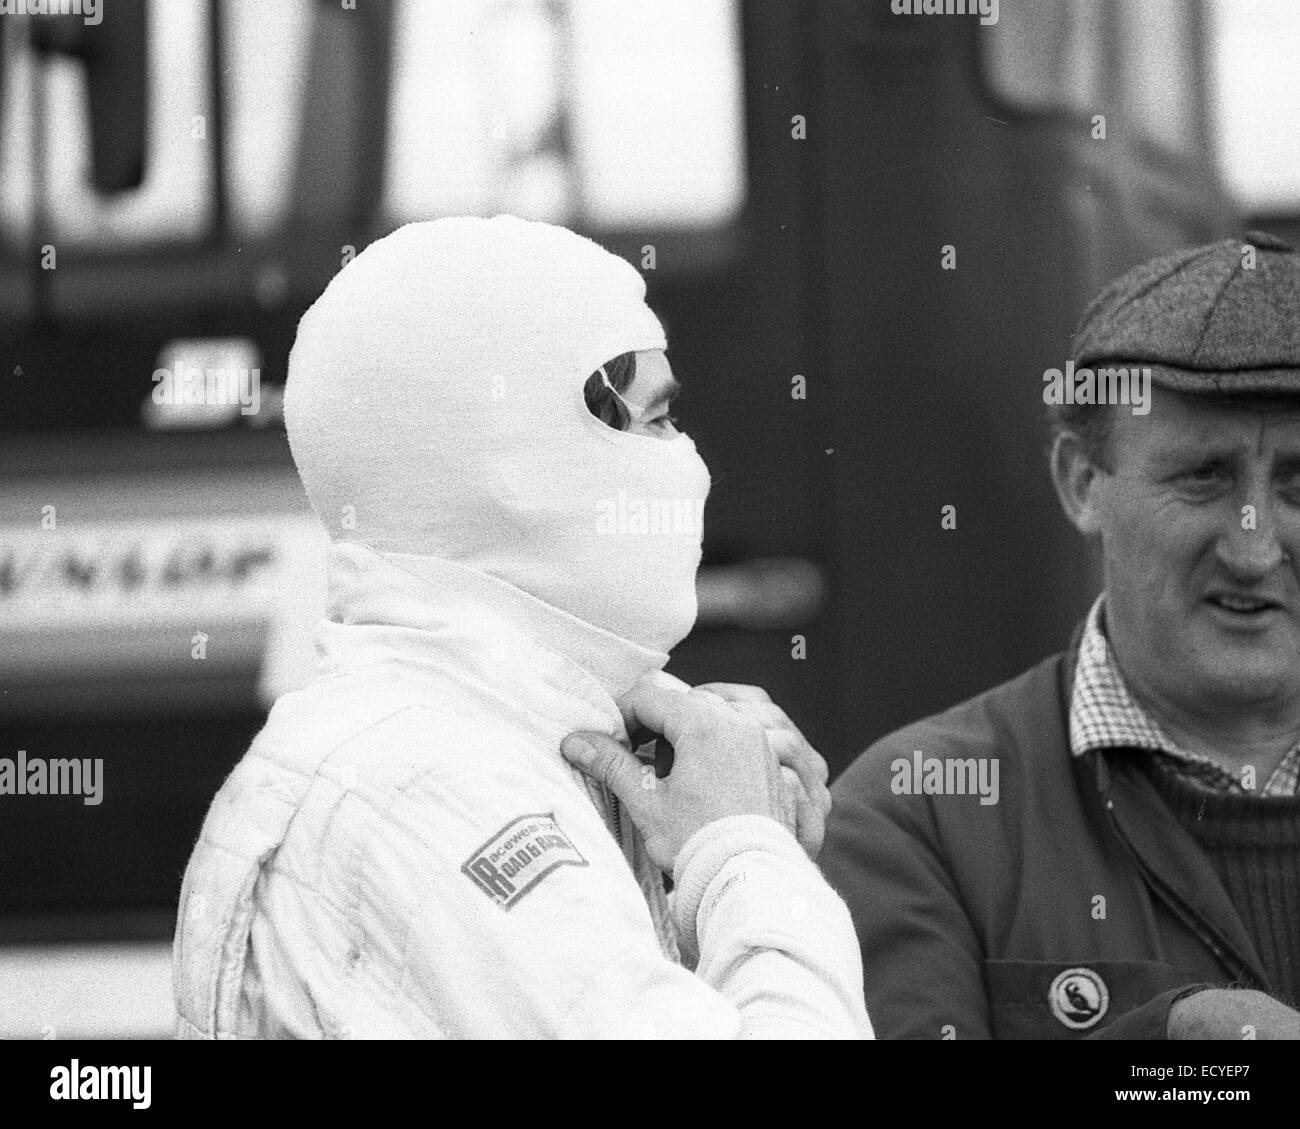 racing driver Tiff Needell in helmet and race suit 1984 Stock Photo